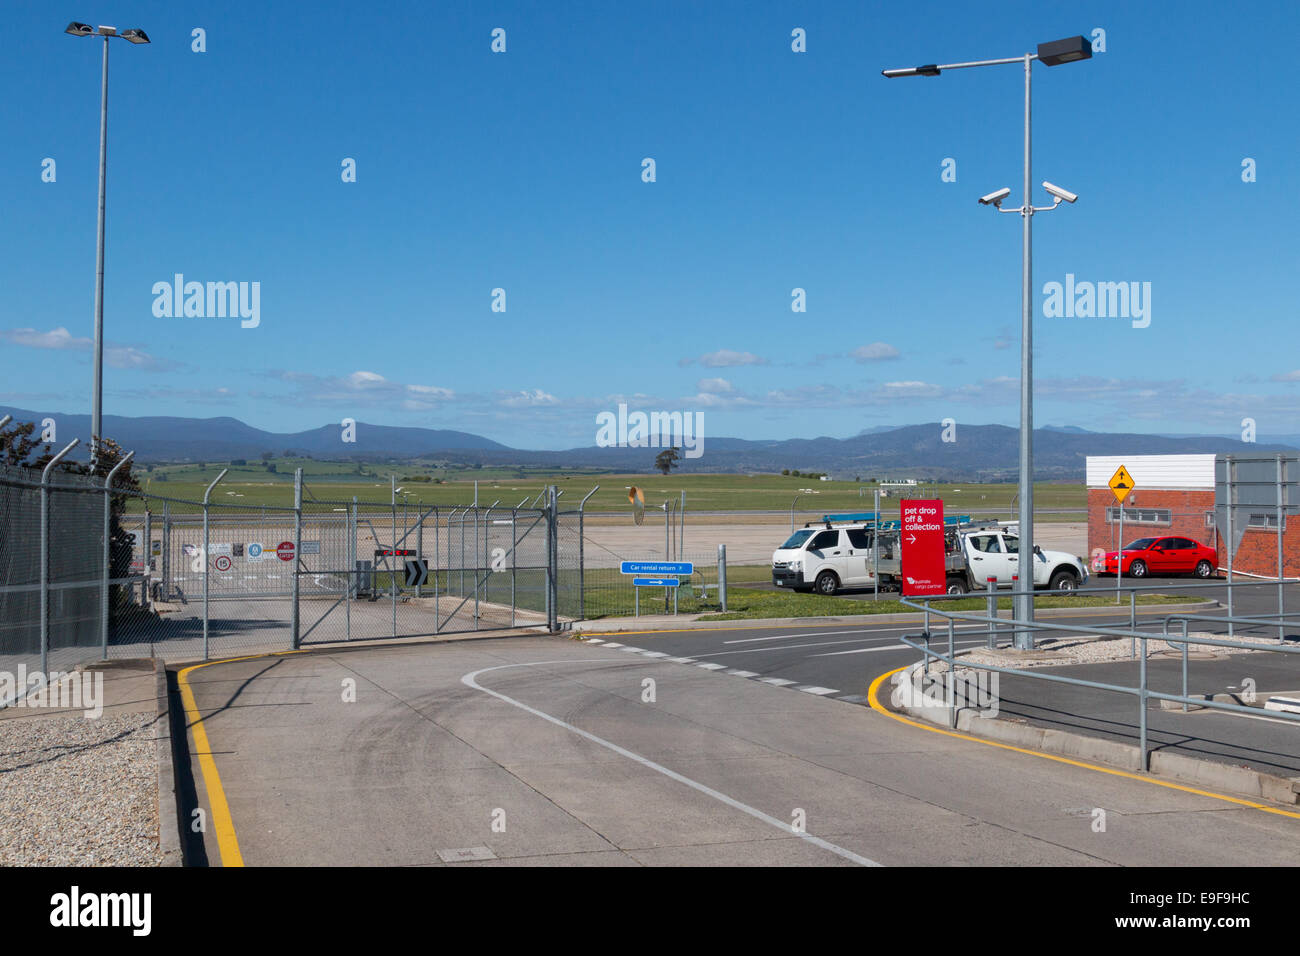 launceston airport and runway,Tasmania,australia Stock Photo